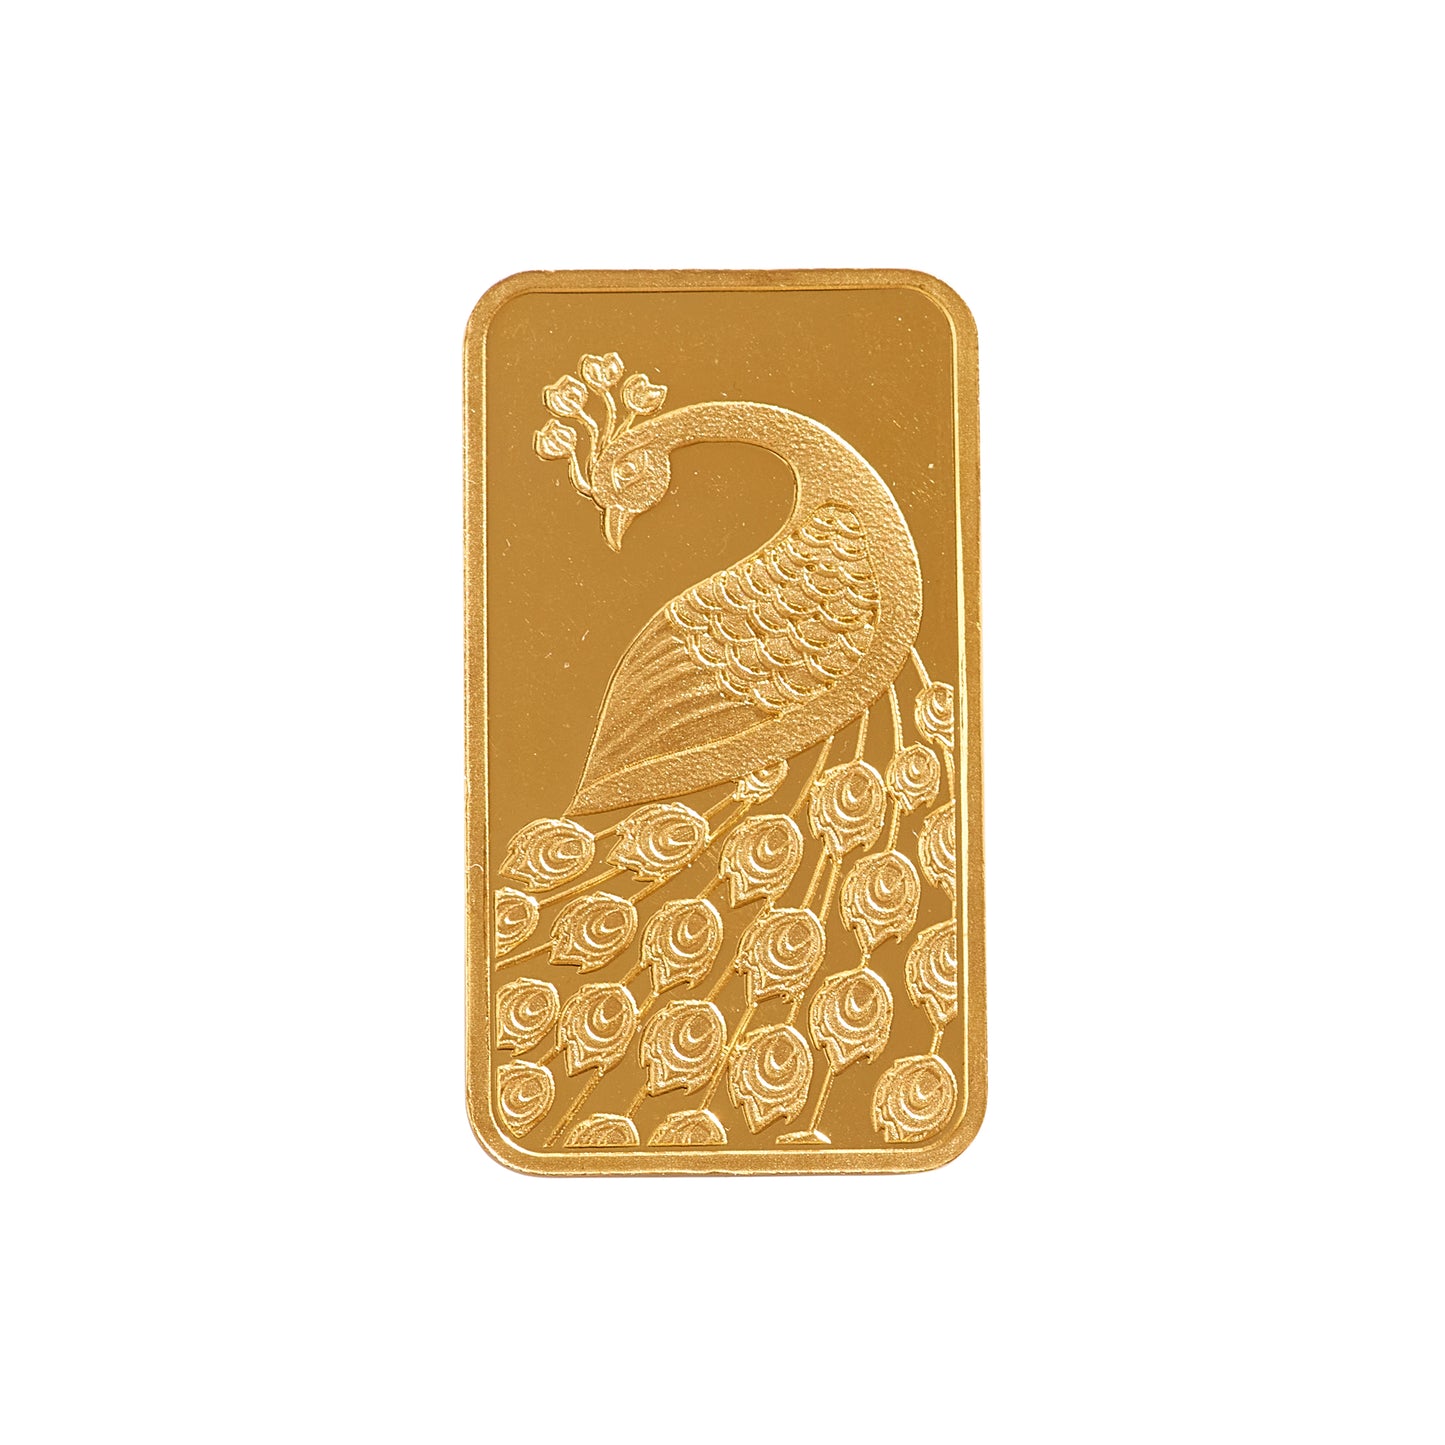 Gold bar 50gm